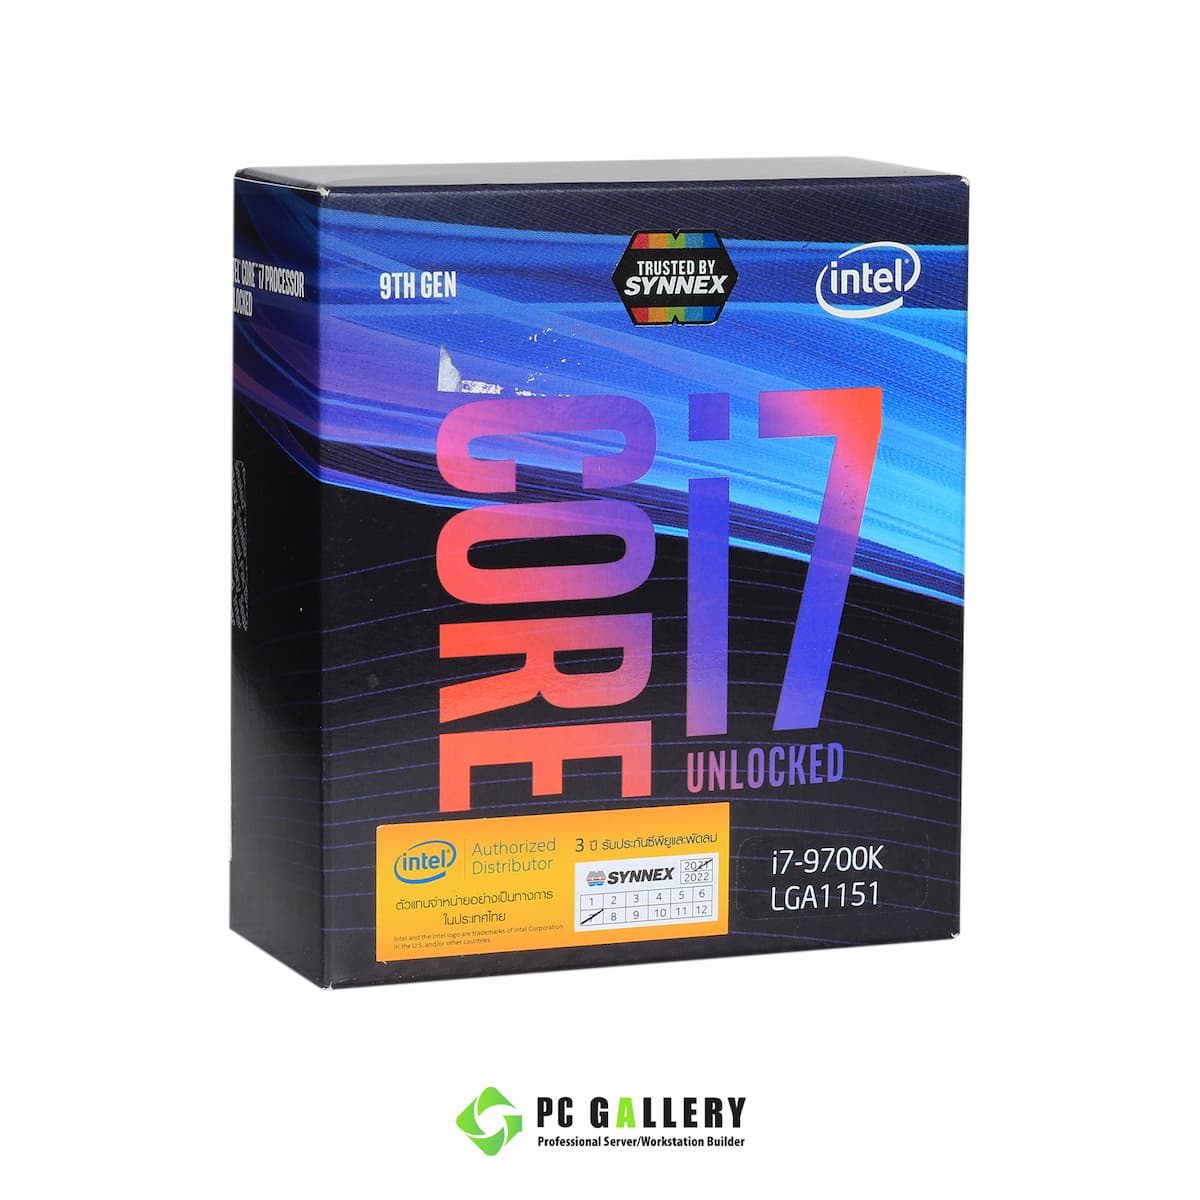 Intel-i7-9700K